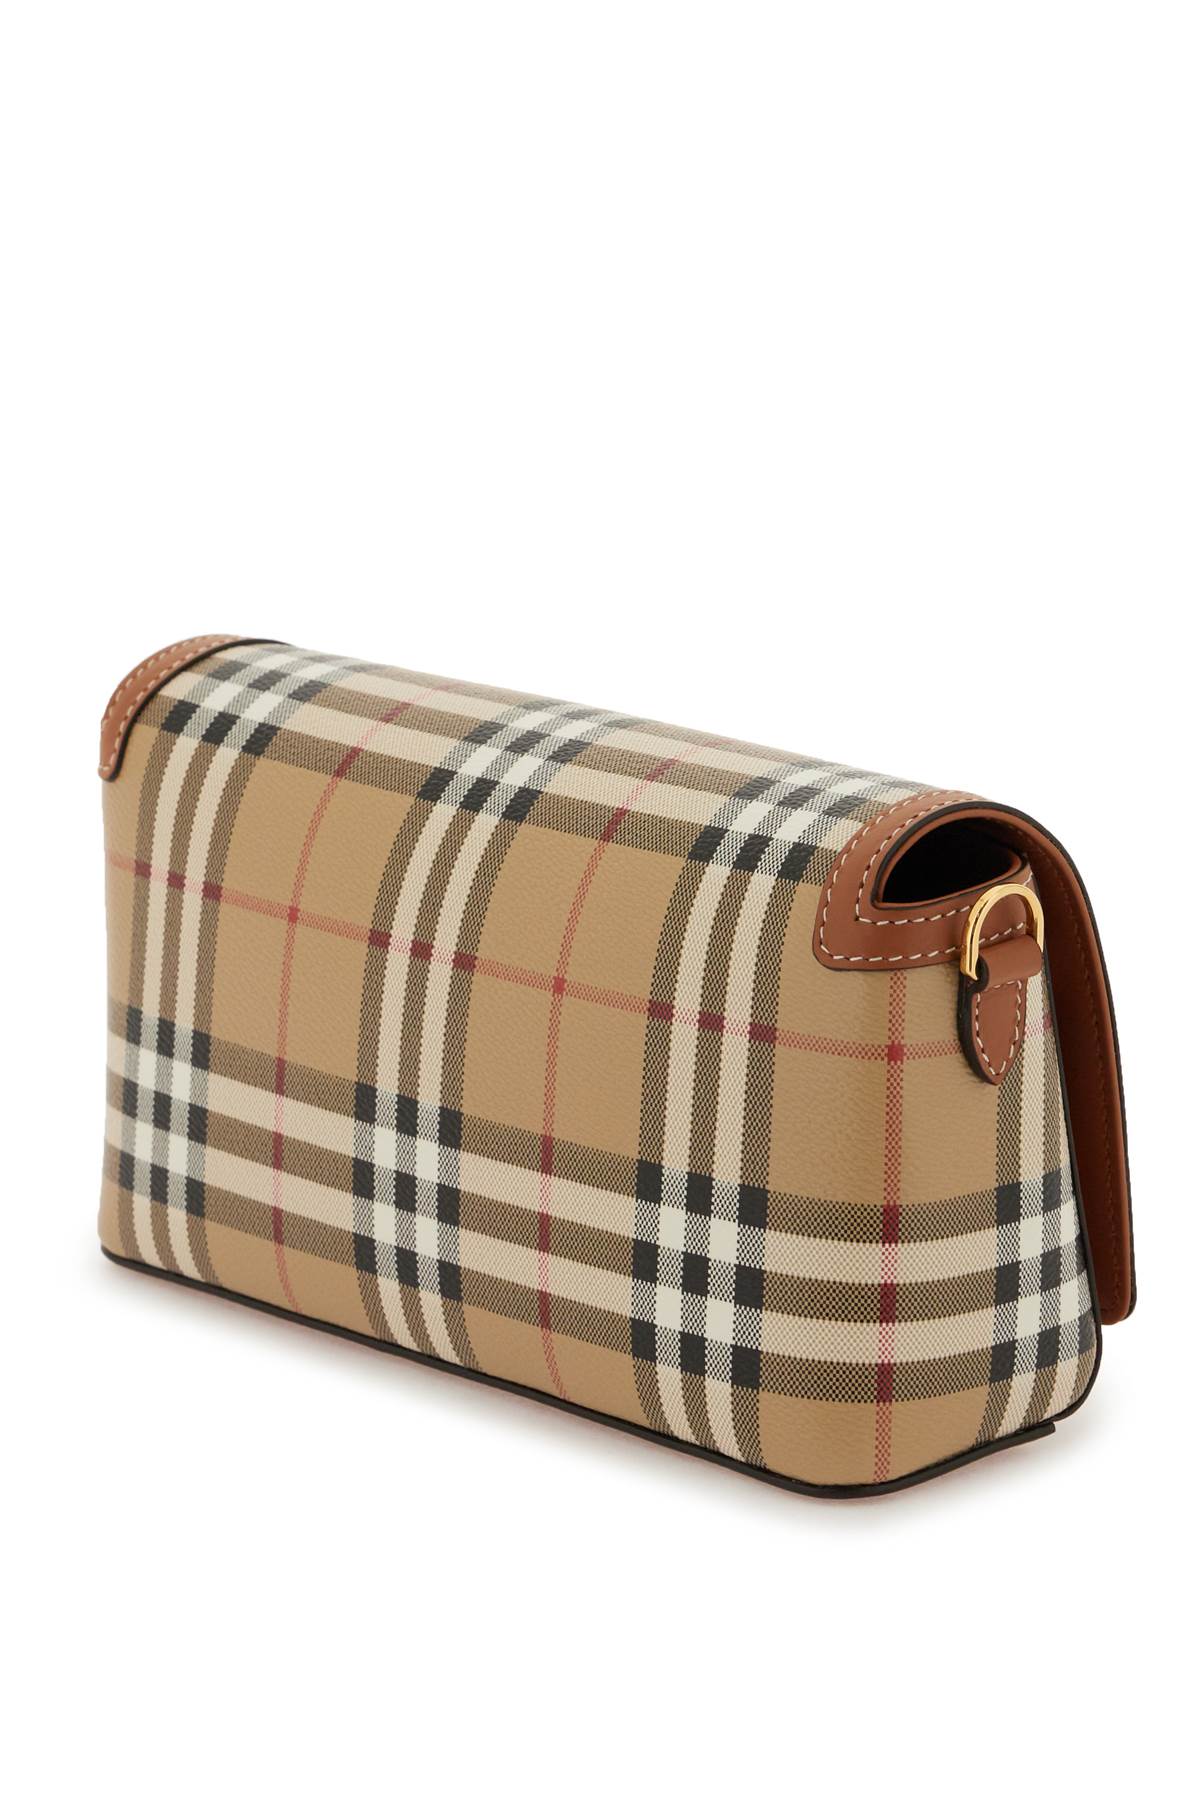 Shop Burberry Elegant Brown Leather And Check Handbag For Women